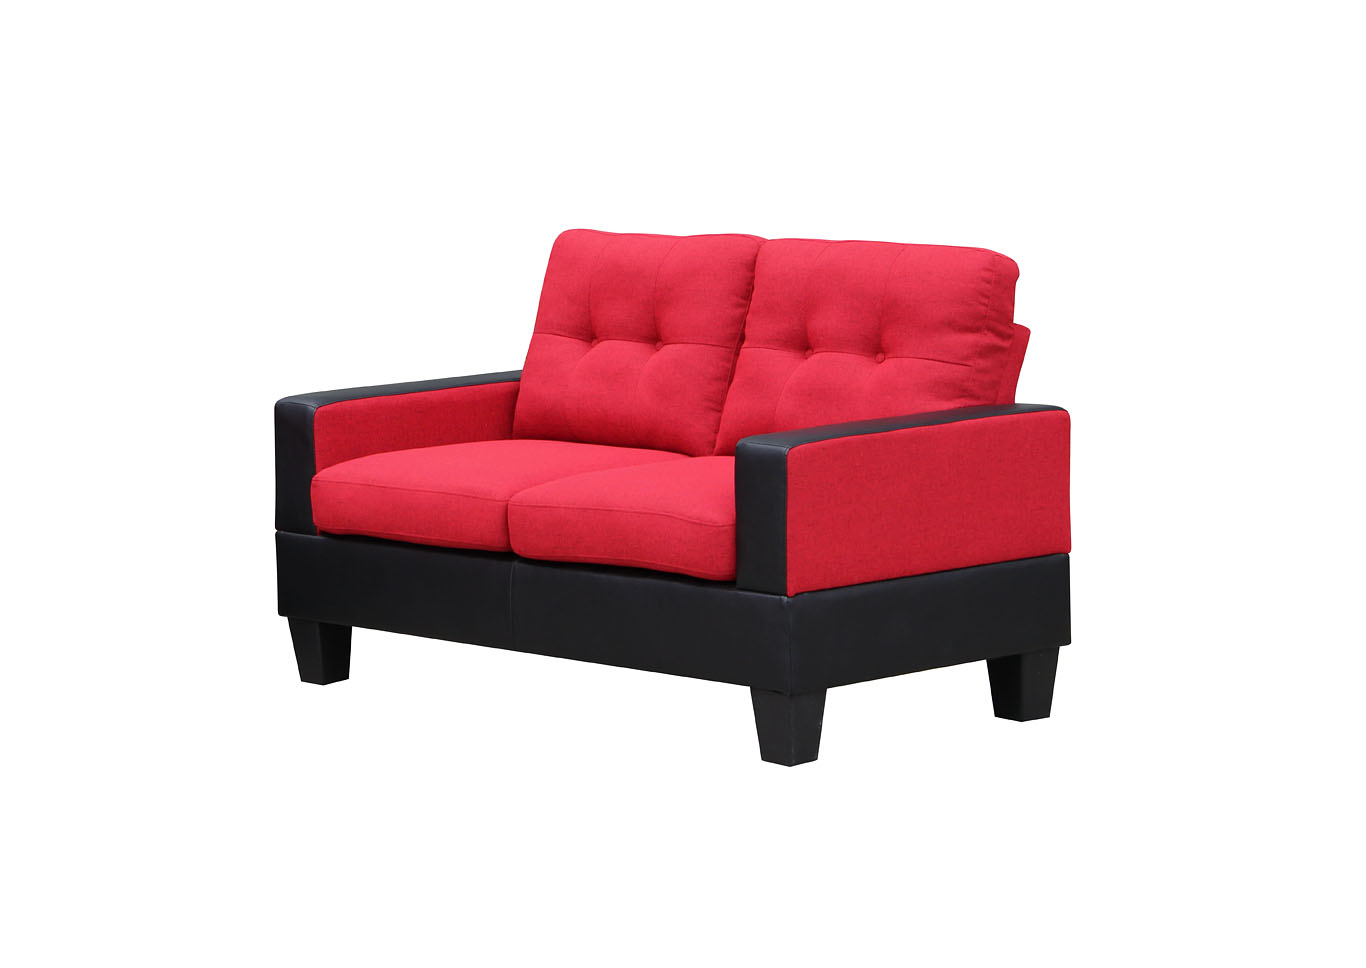 Red/Black and Sofa,Titanic Furniture